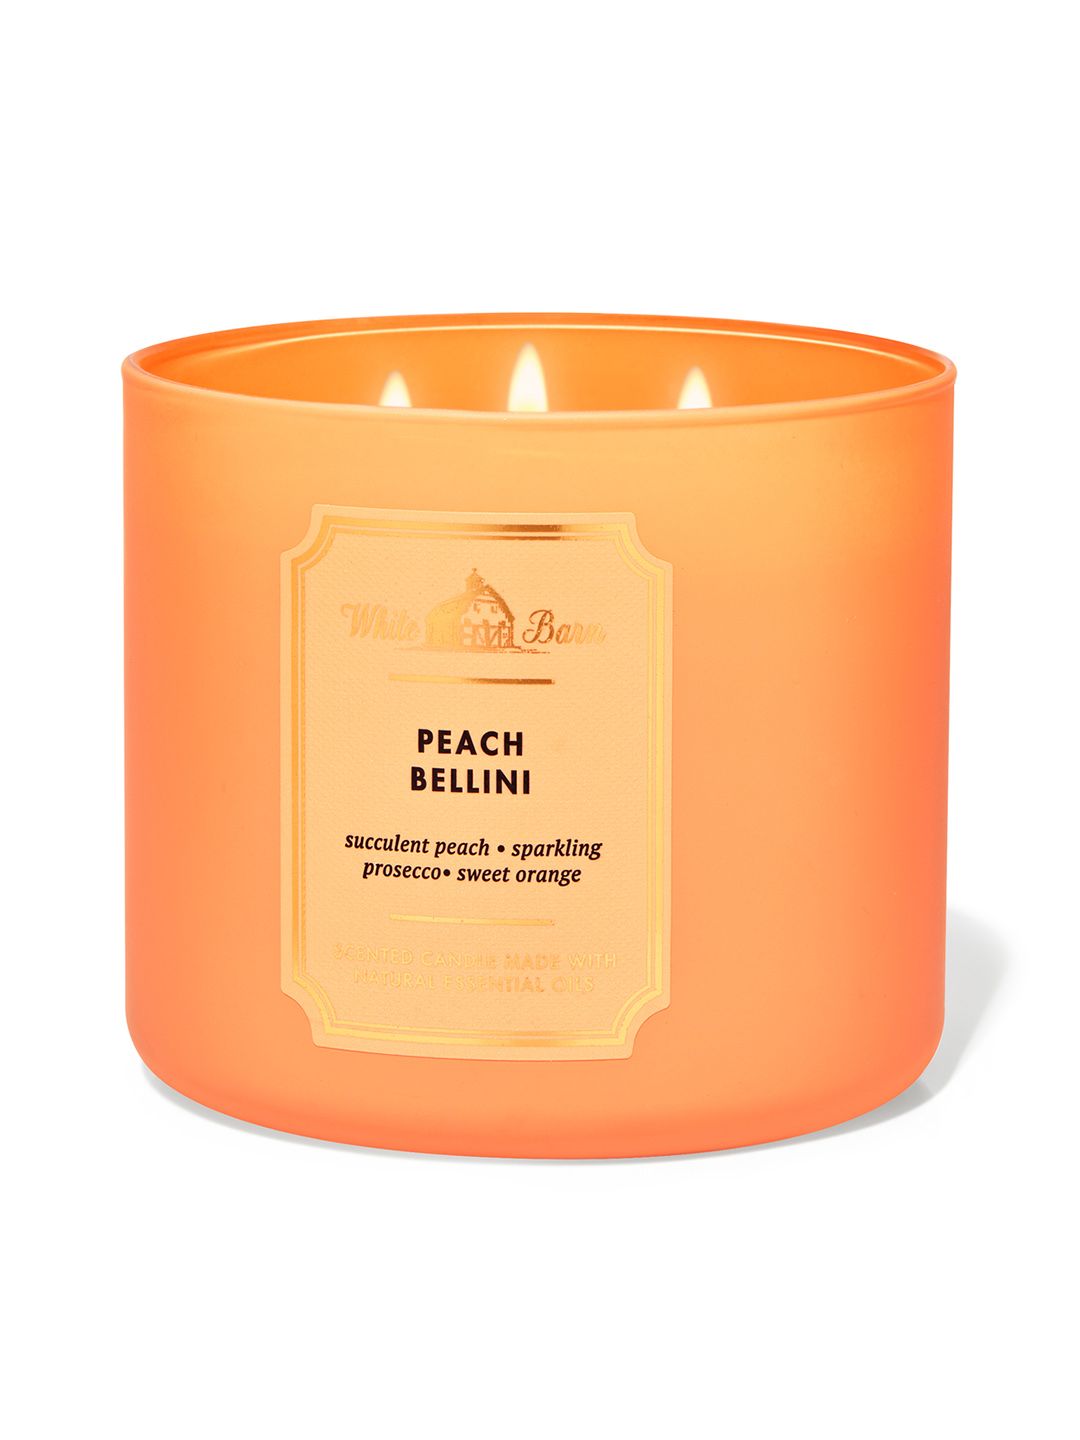 Bath & Body Works Peach Bellini 3-Wick Candle - 411 g Price in India